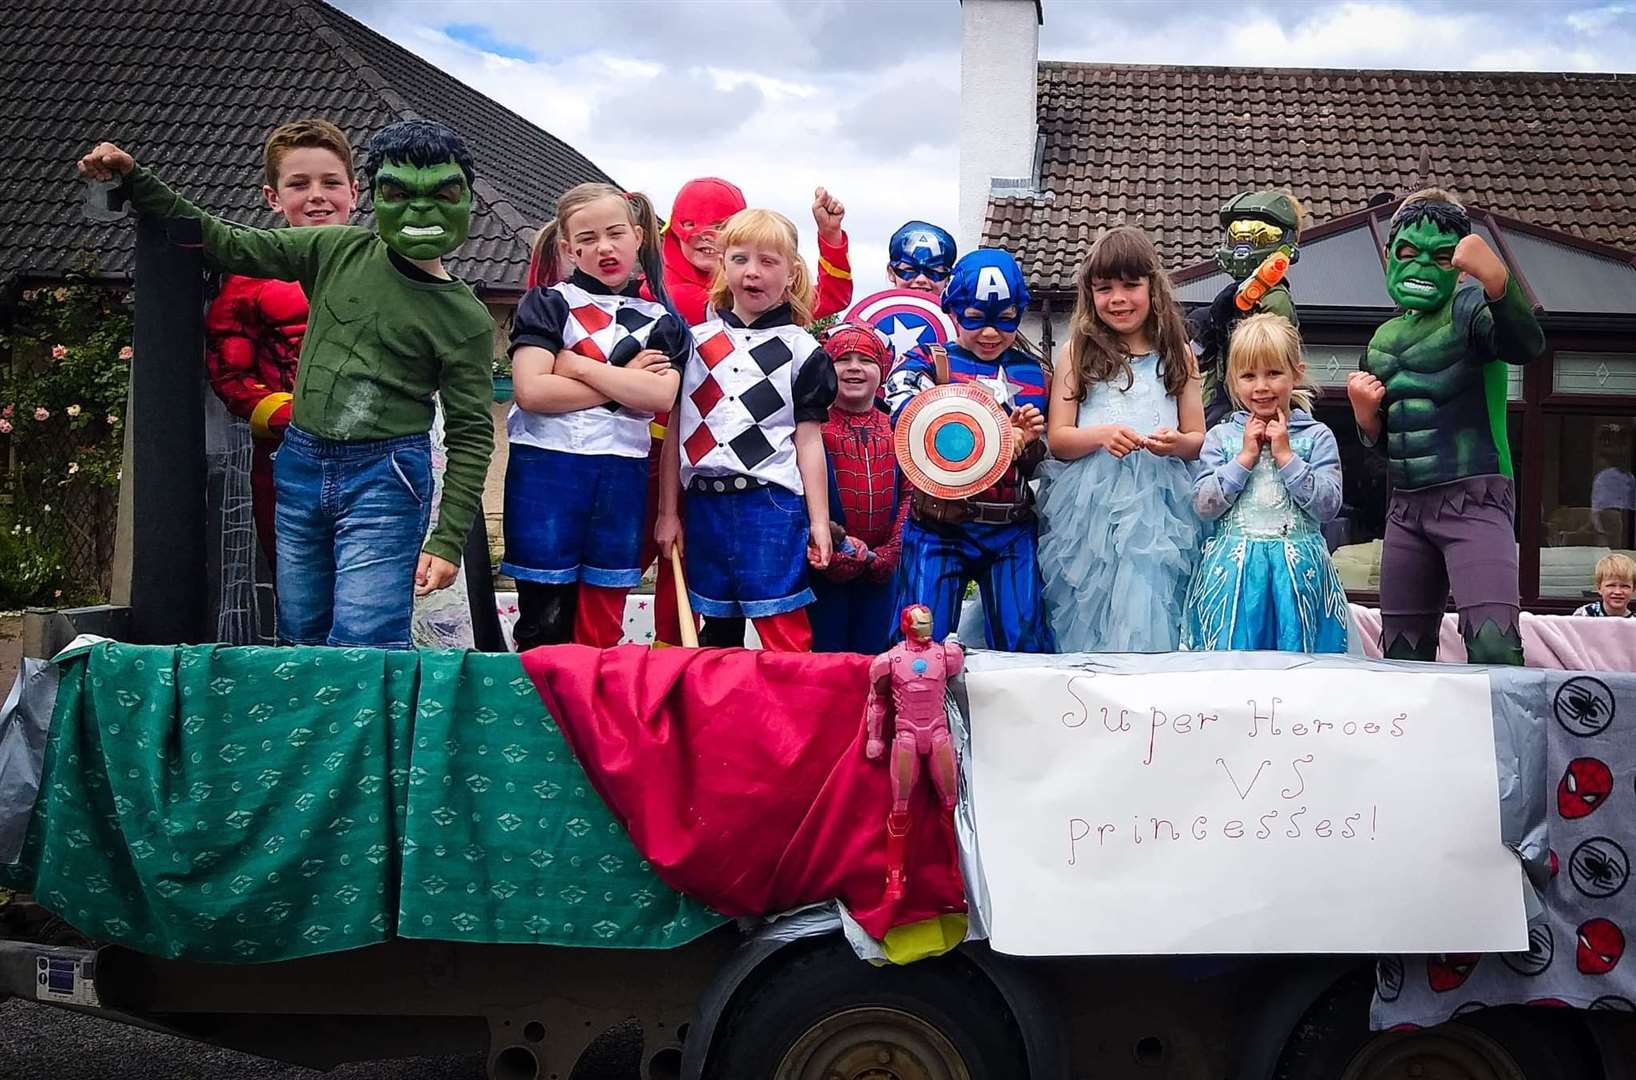 The children taking part in superheroes vs princesses. Picture: Emma Harrison